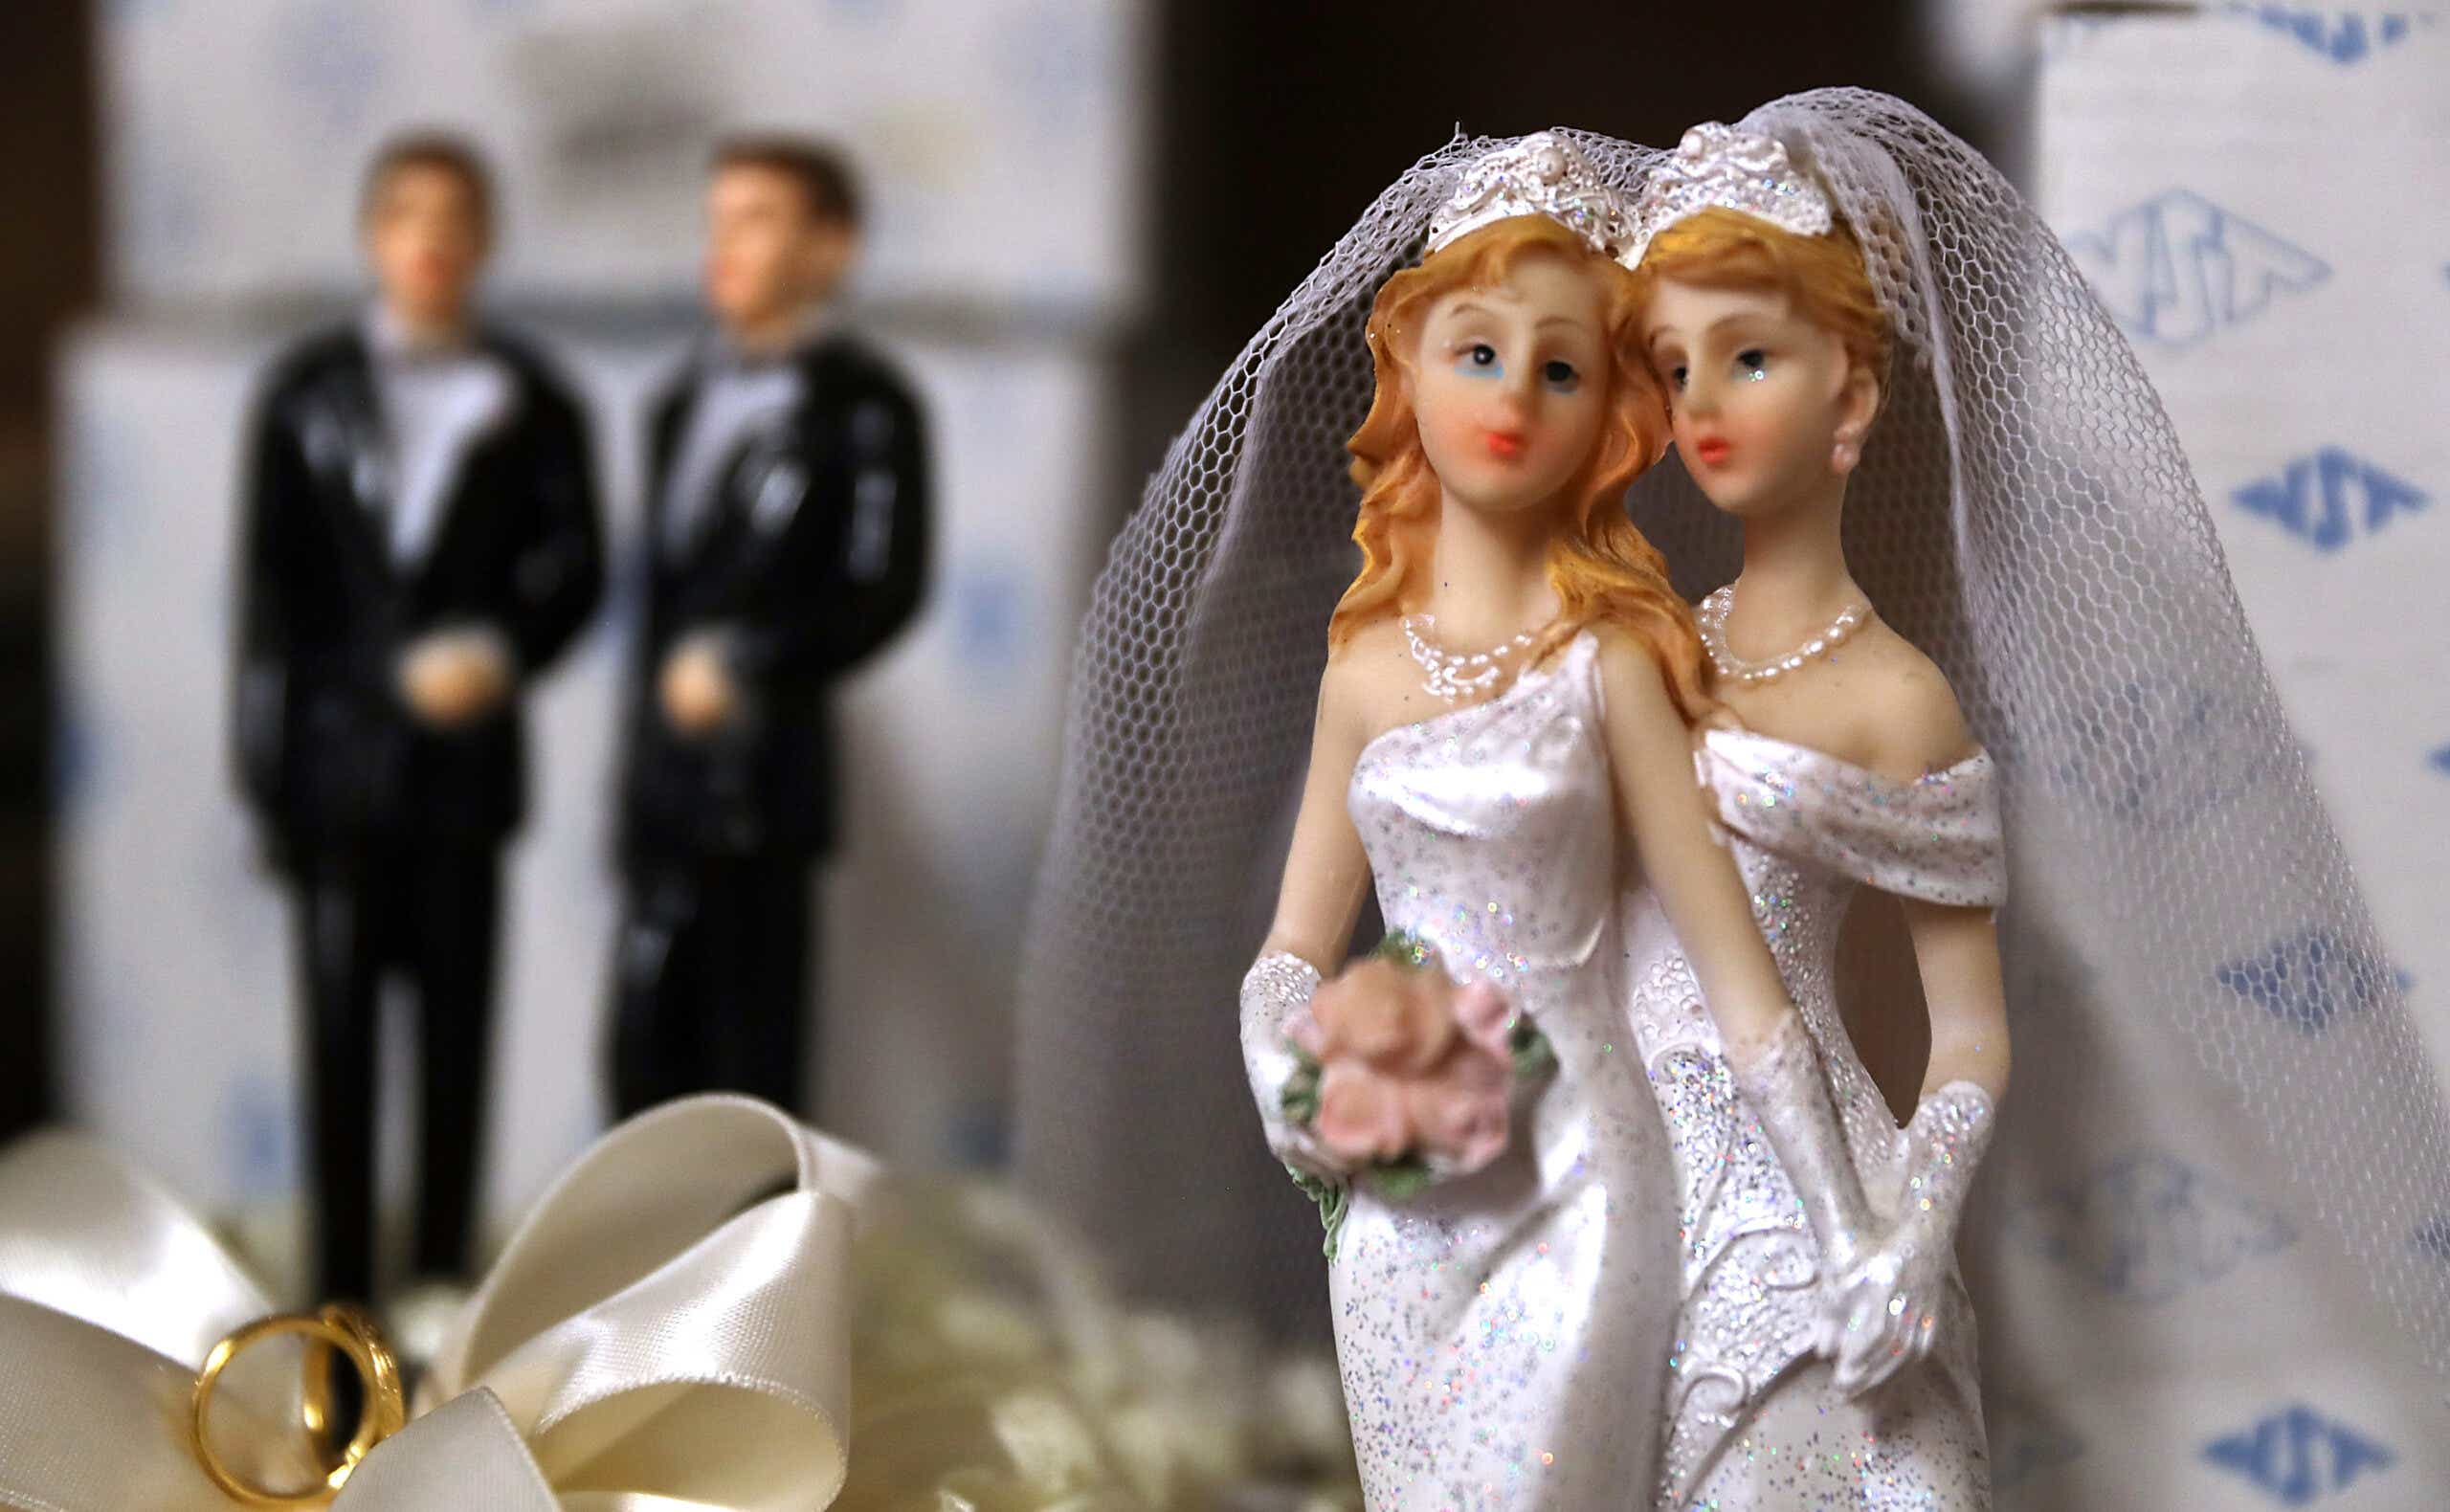 same-sex wedding cake toppers